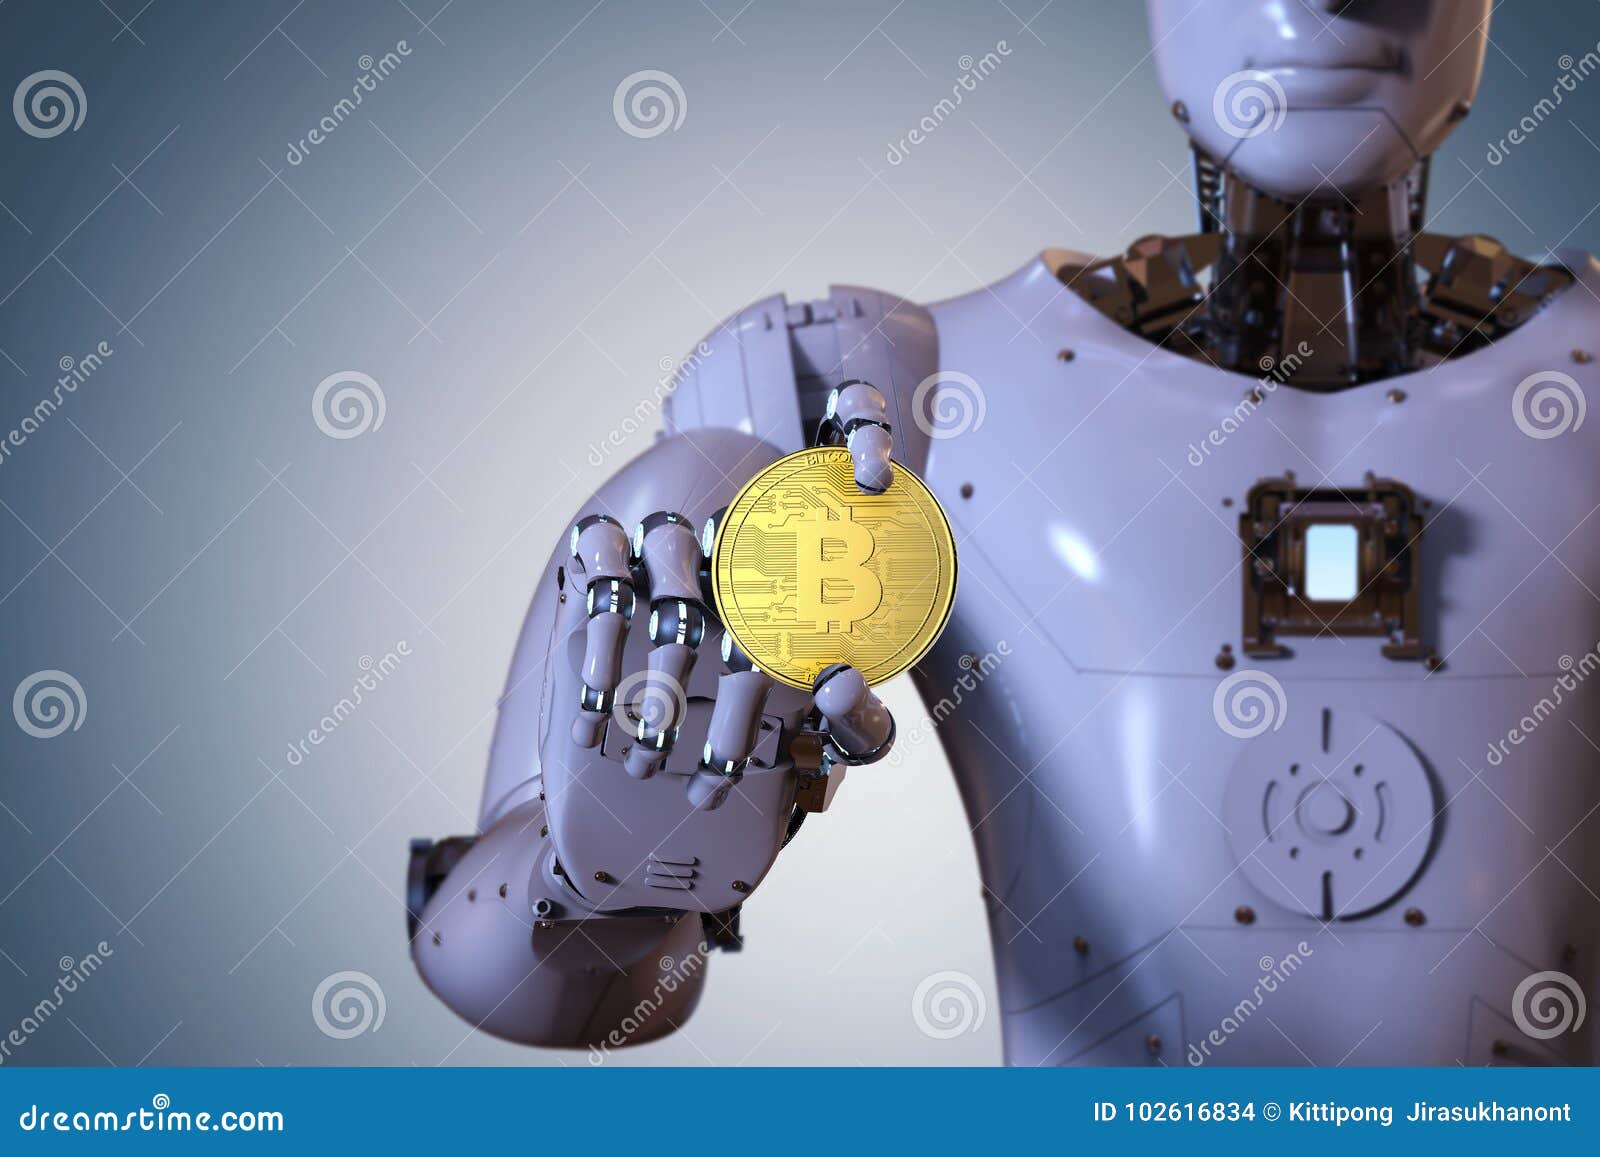 auto robot mineraria bitcoin